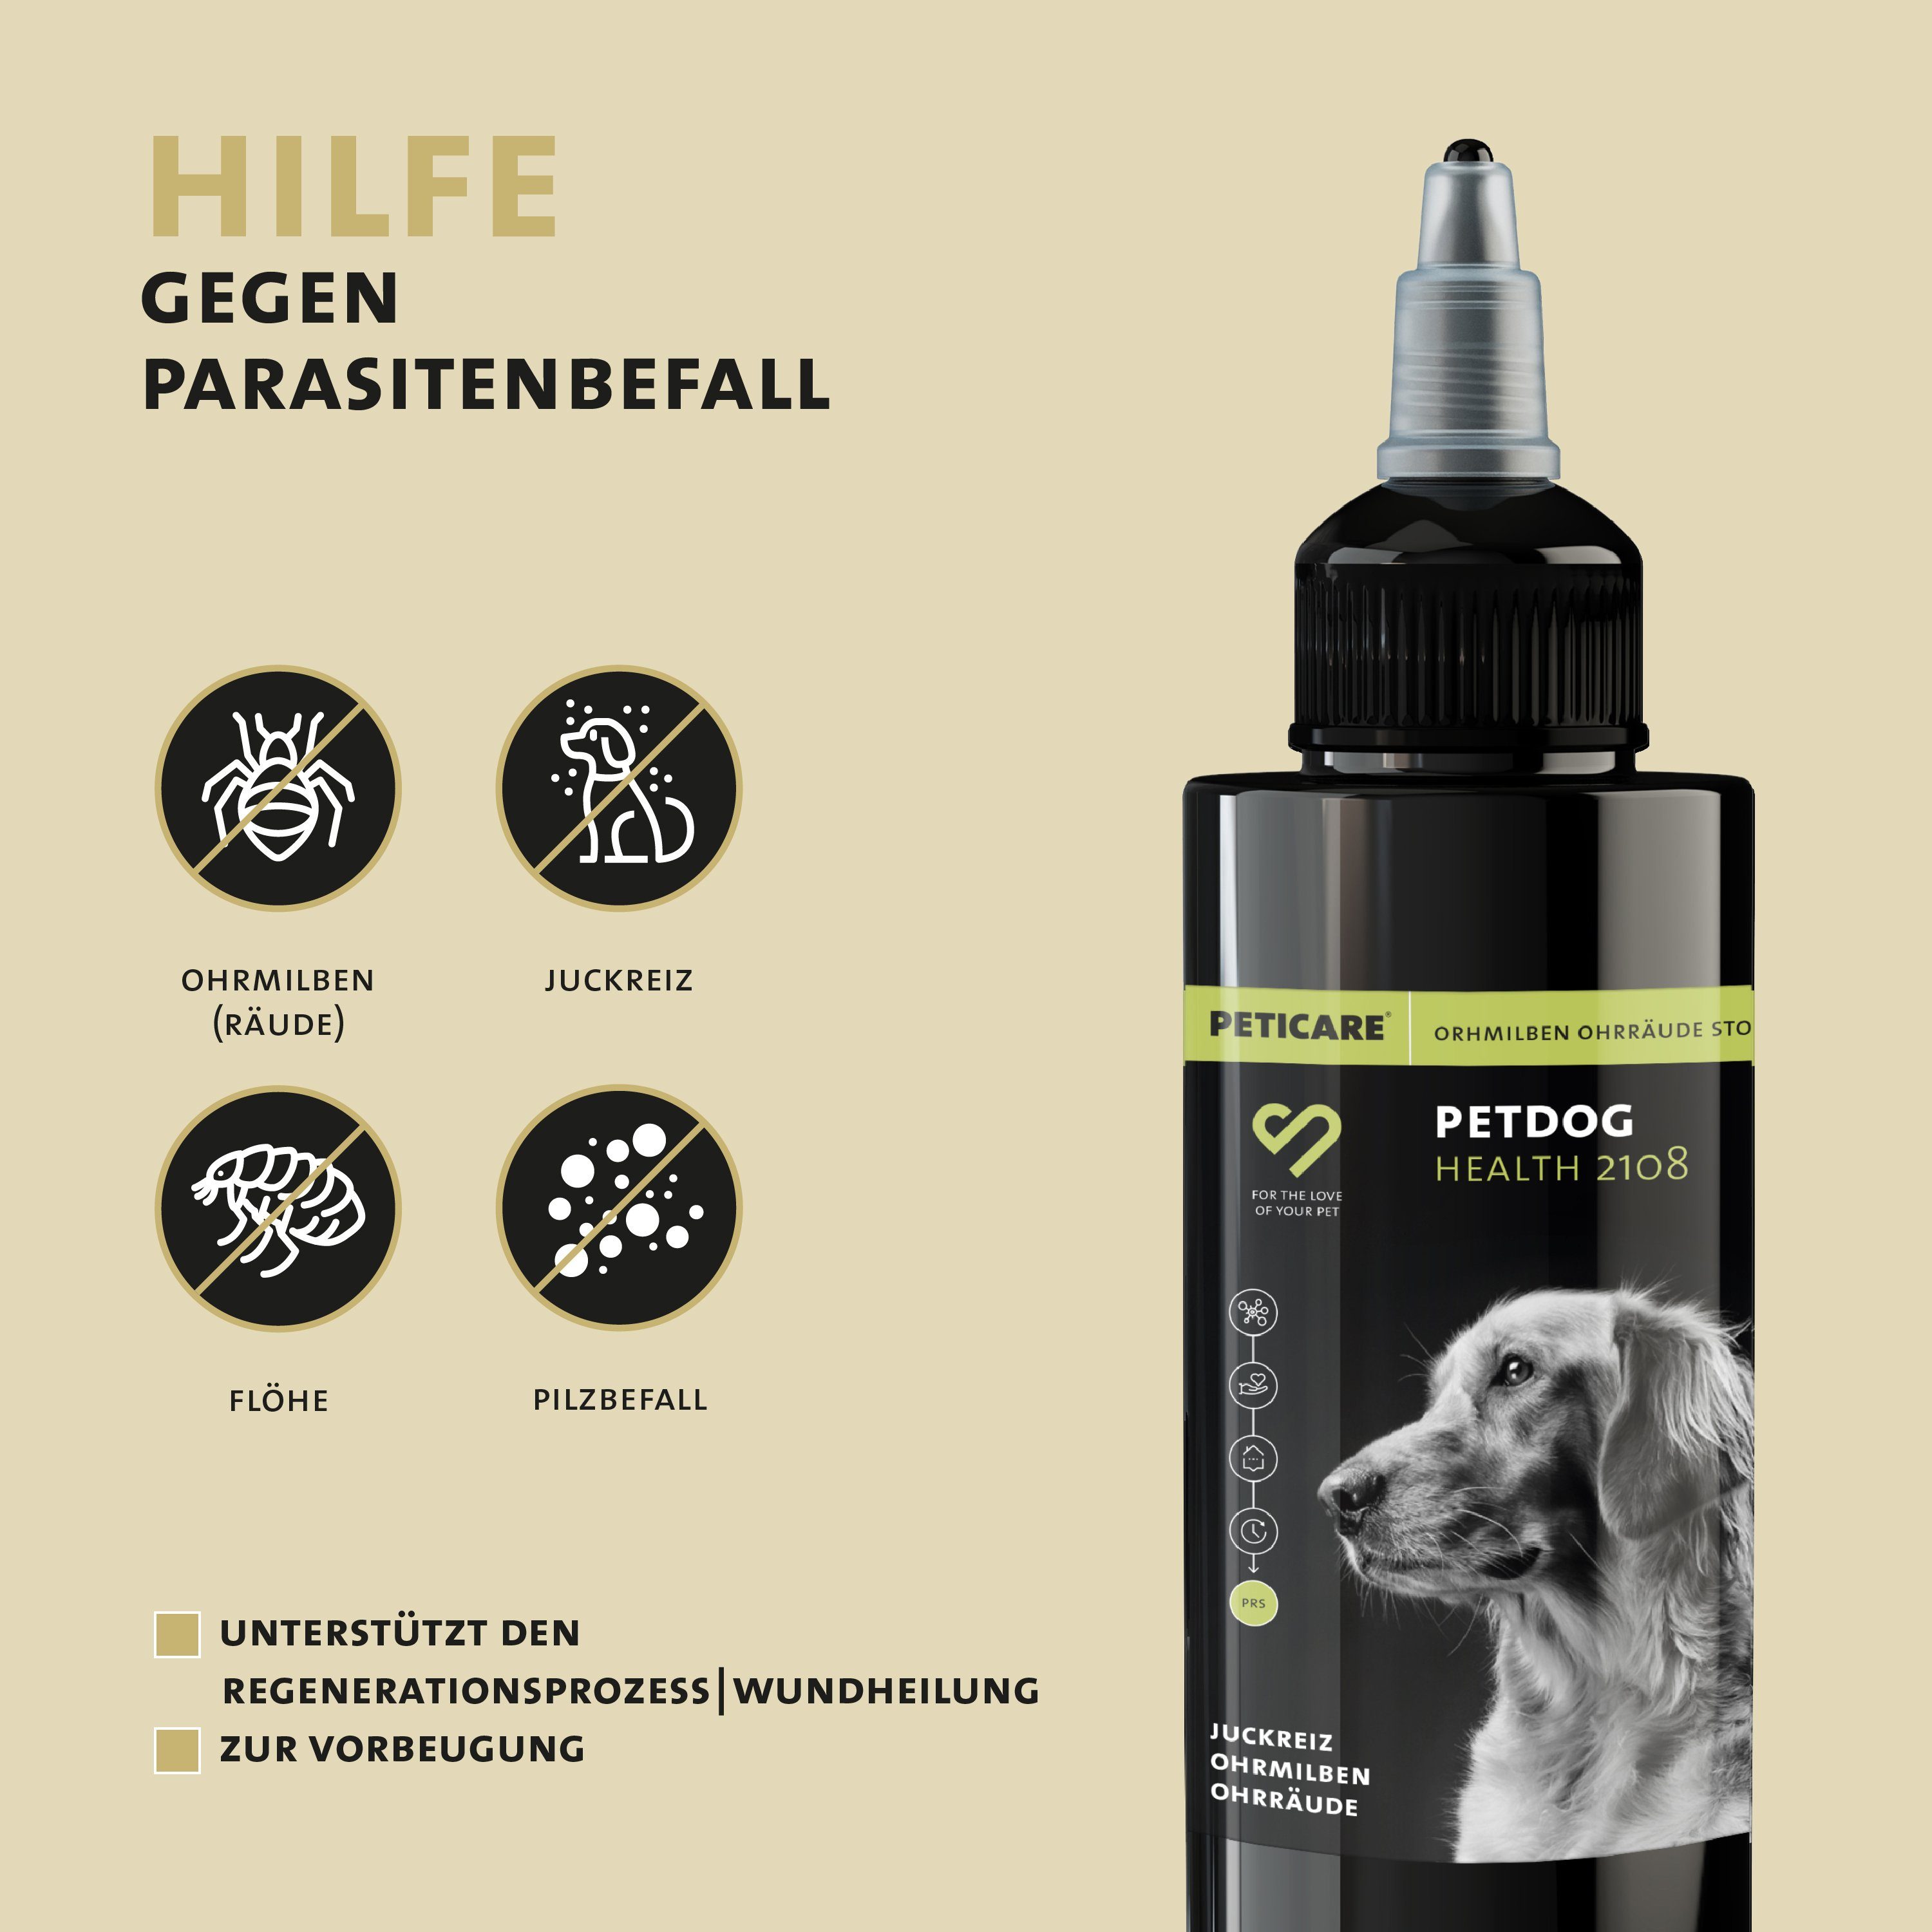 Health Peticare Insektenspray ml 2108 für Ohrräude Ohrmilben, Hunde, Lotion 50 - petDog